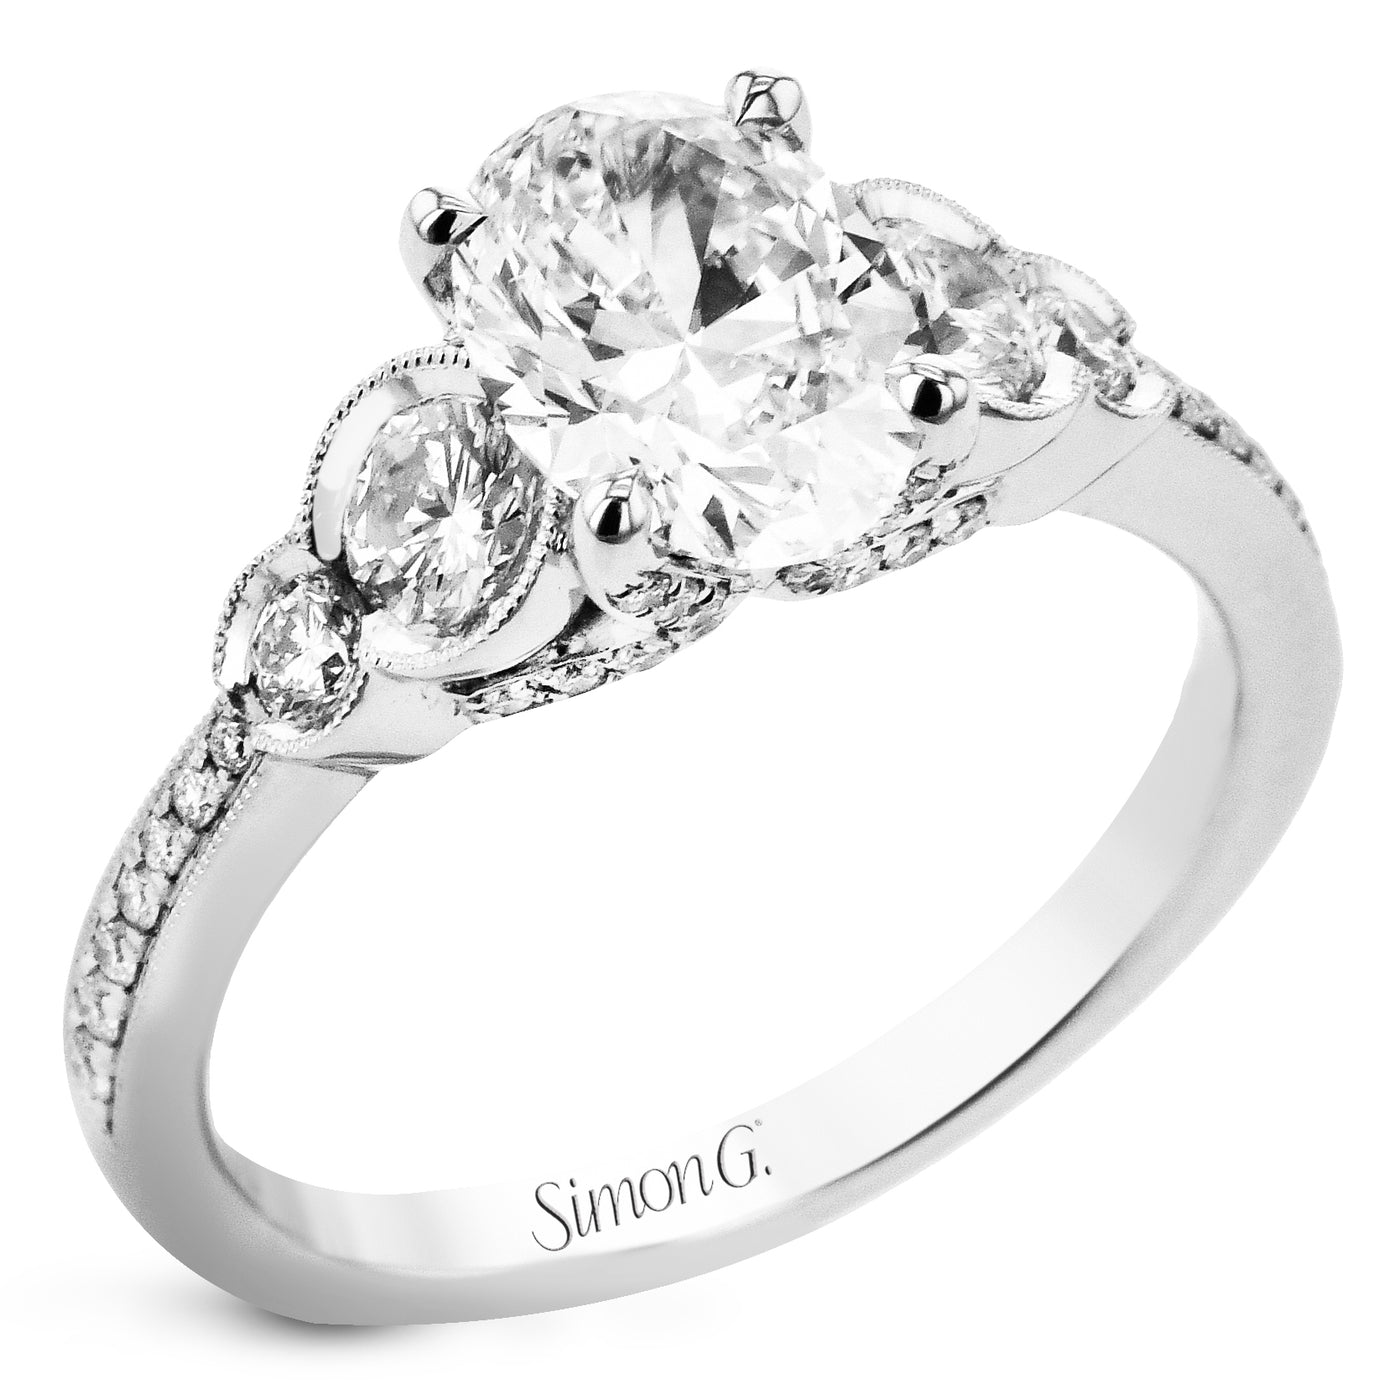 Simon G Jewelry 18 Karat White Gold Round Diamond Engagement Ring